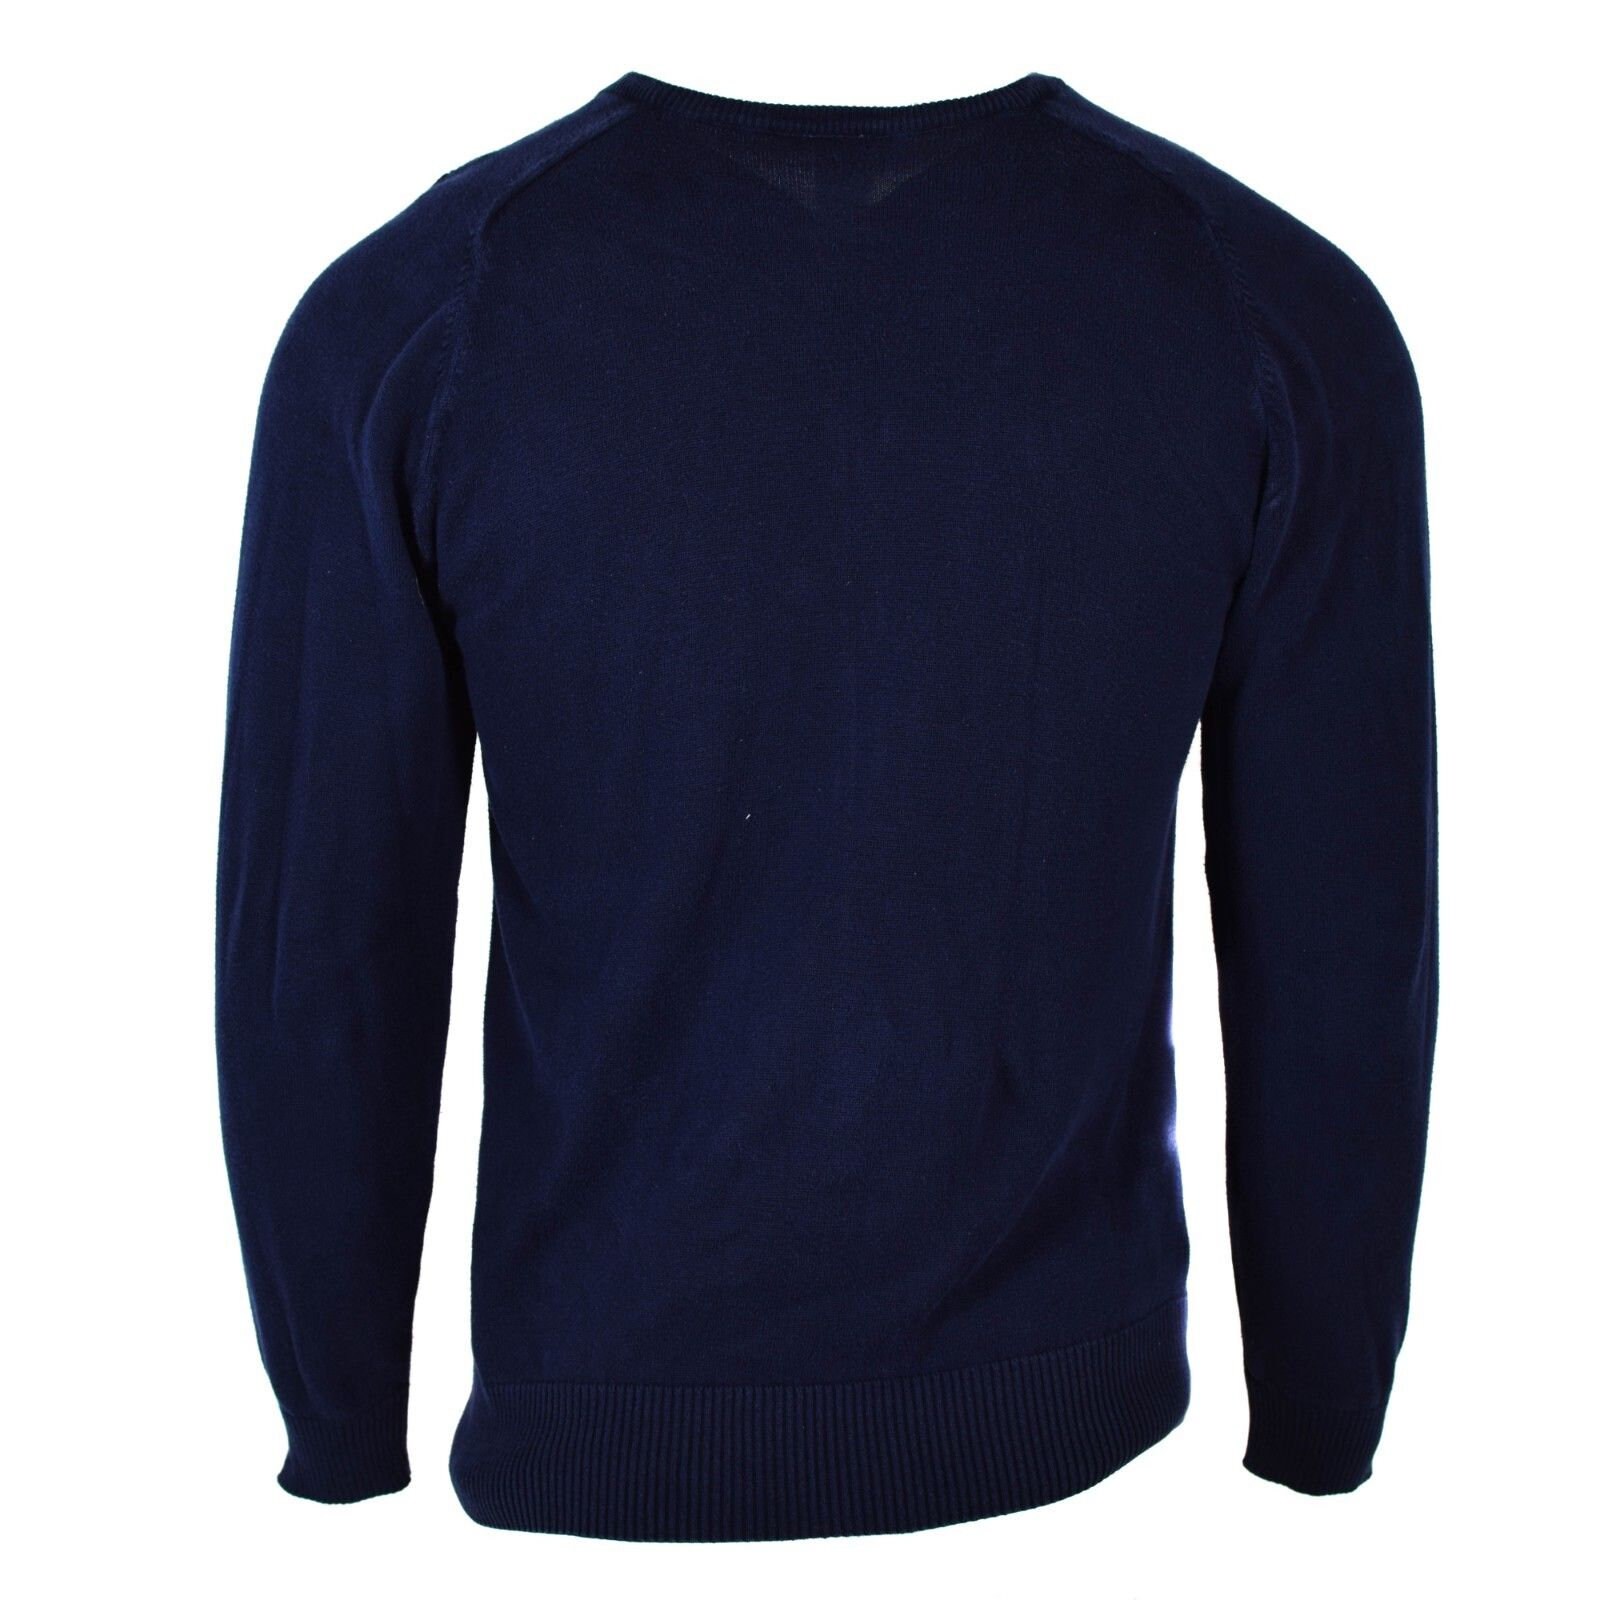 Original British pullover V-Neck blue sweater Wool